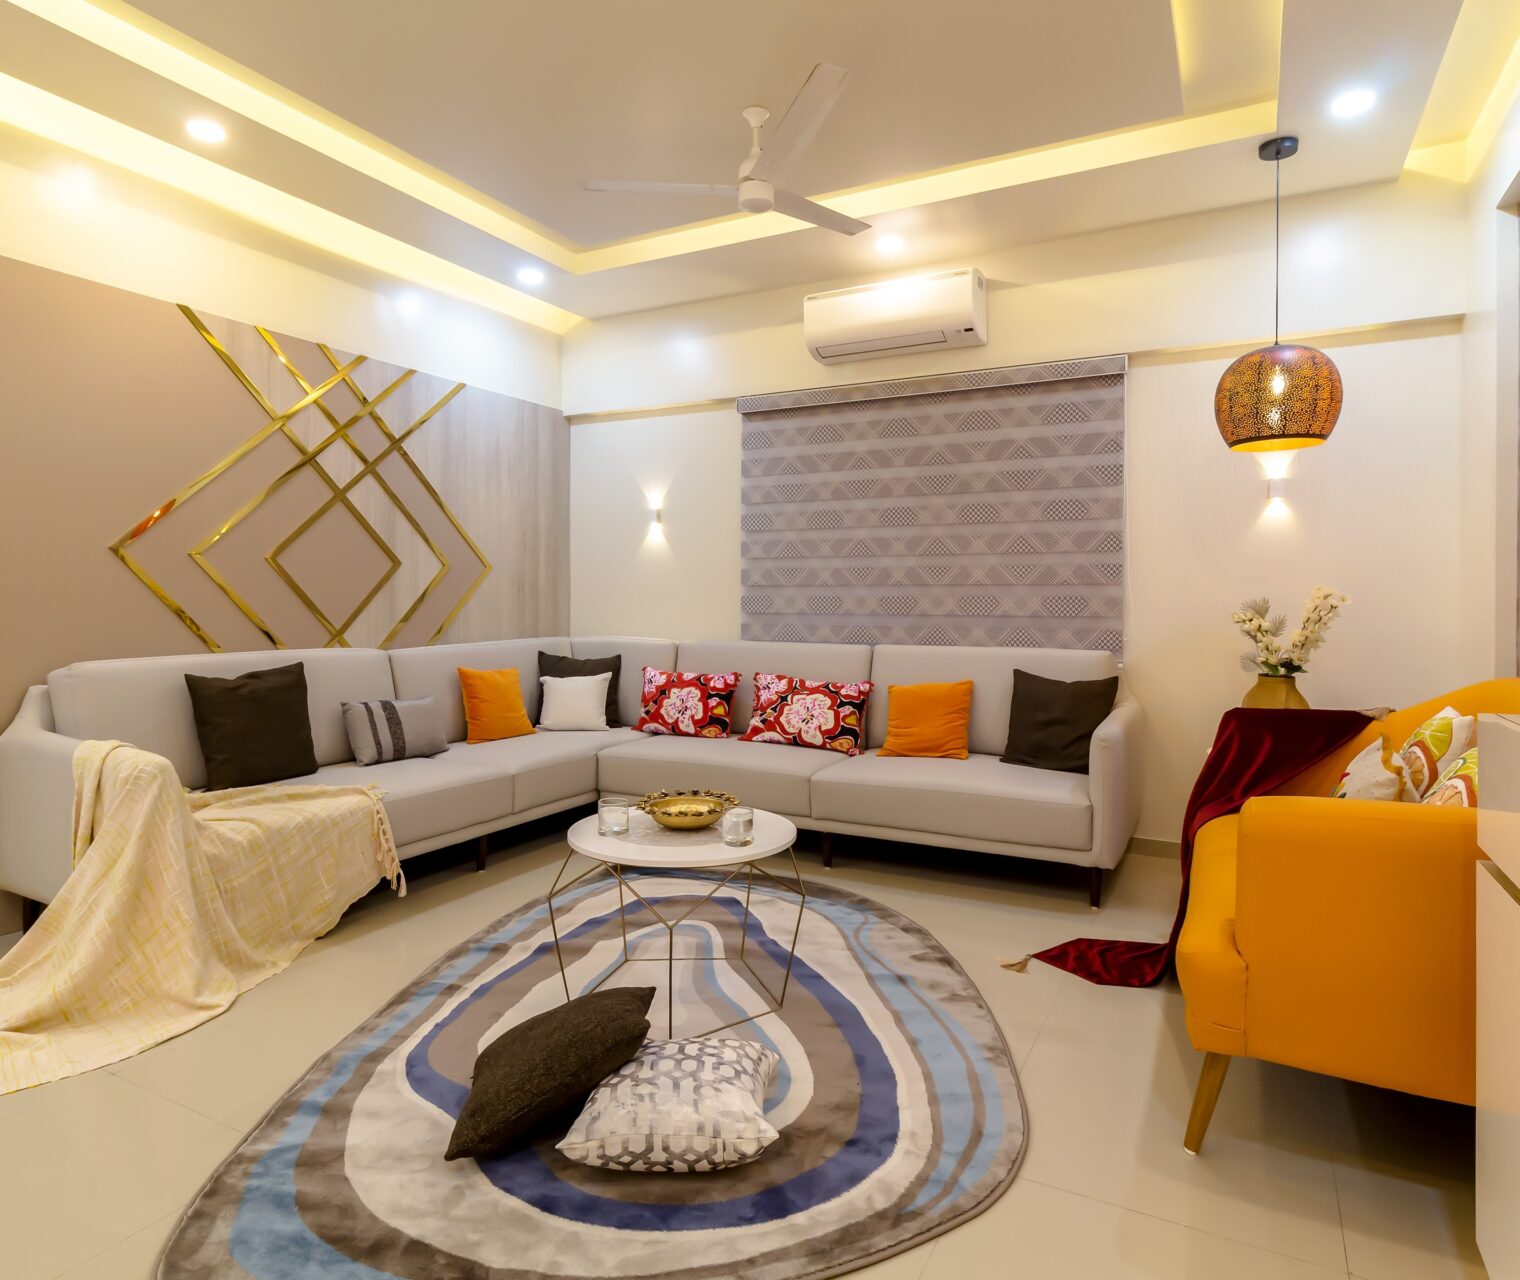  Find the best interior designers in Pune